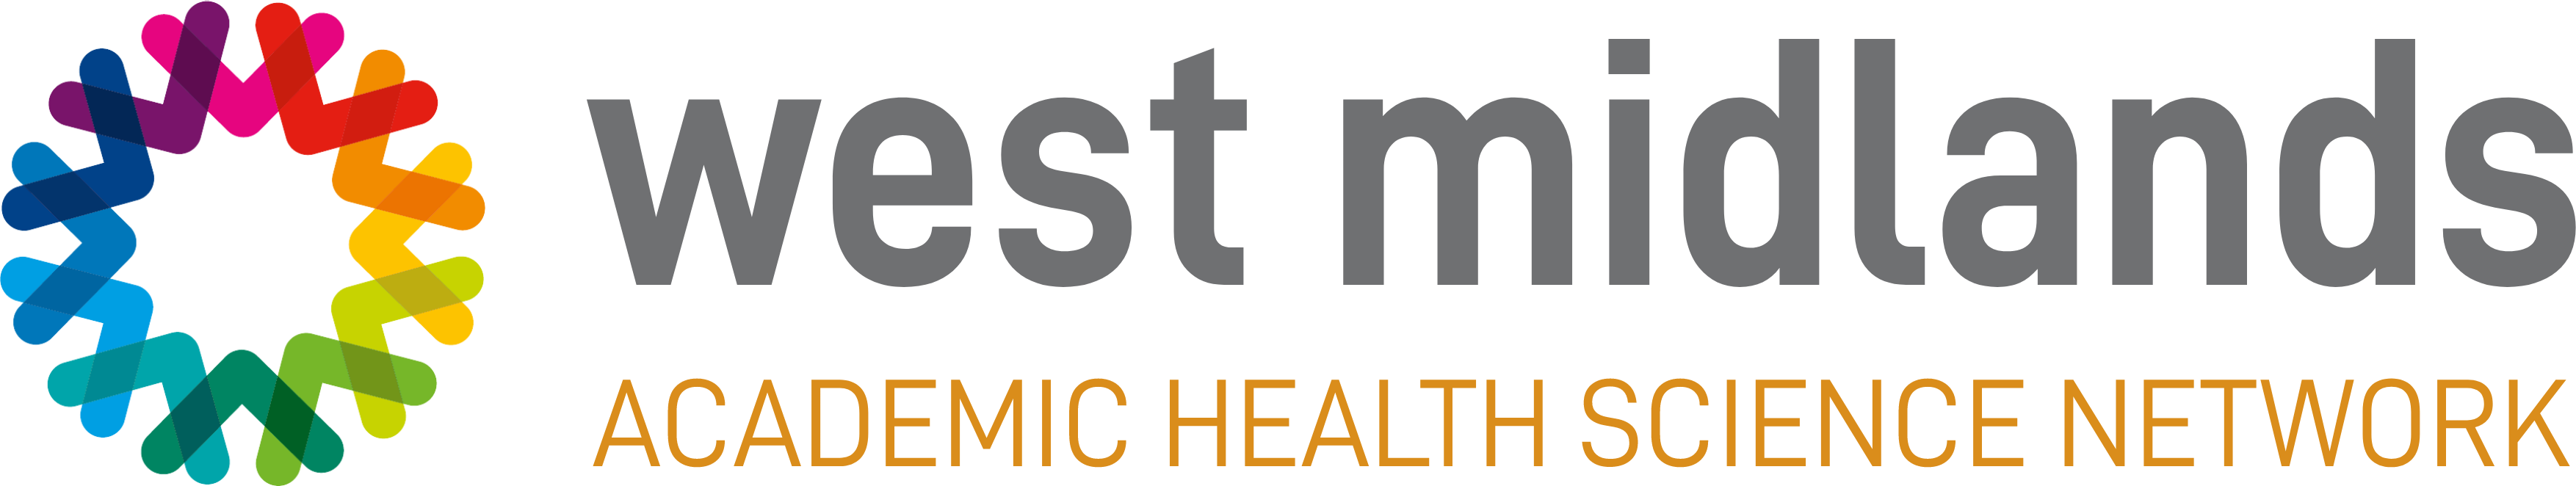 West Midlands Academic Health Science Network Logo